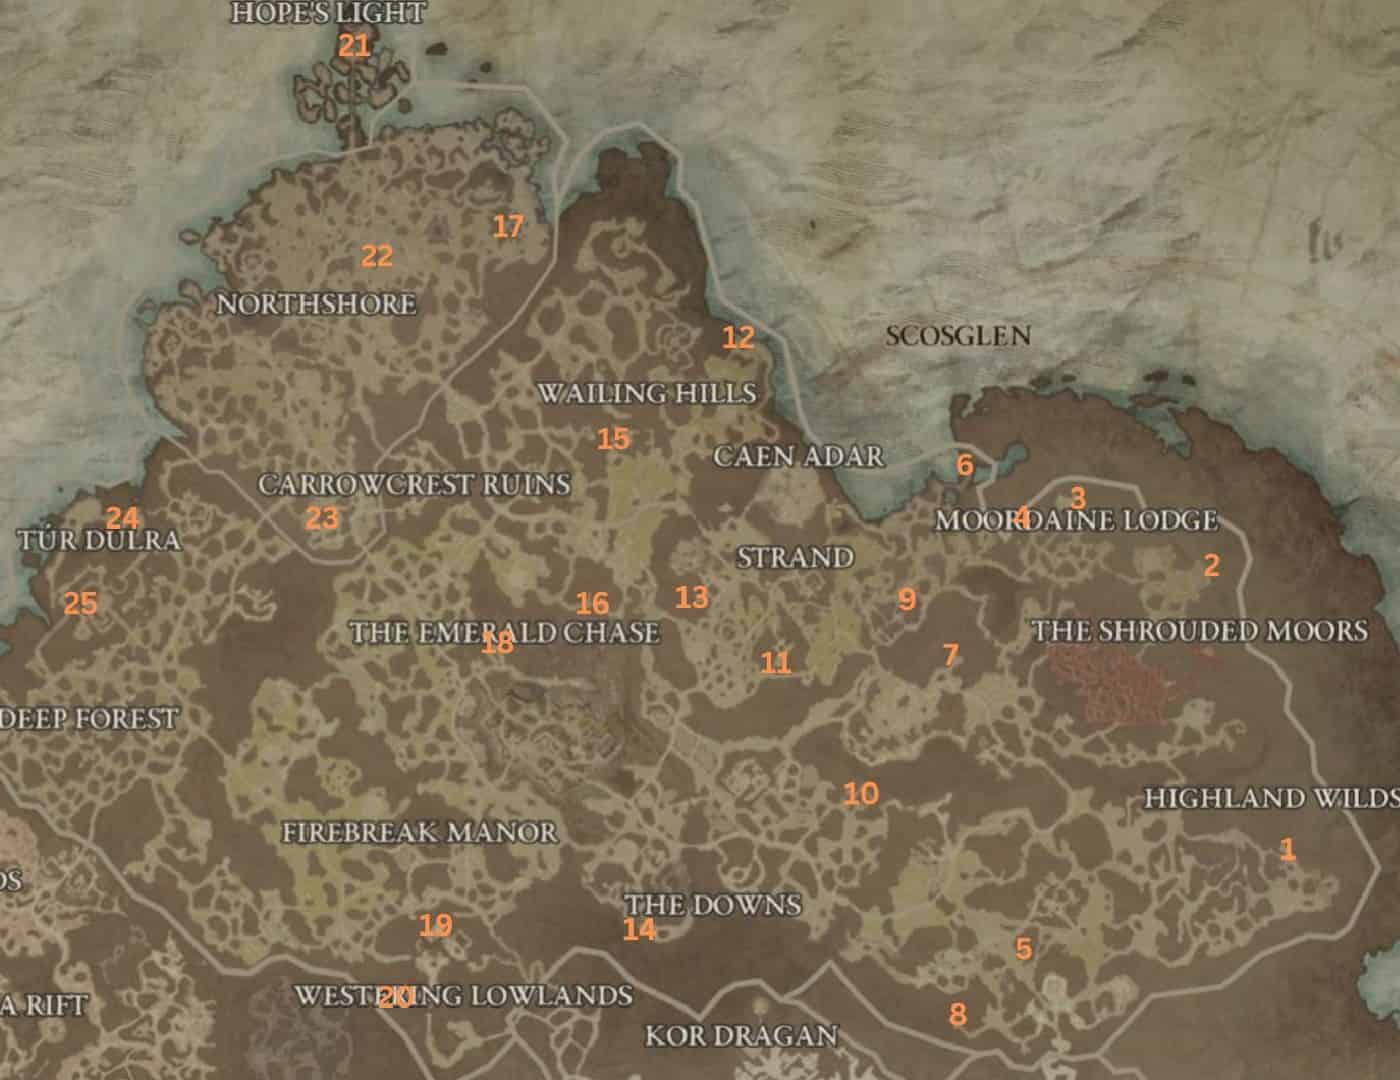 Diablo 4 Dungeons: A map of Diablo 4's Scosglen region with dungeons marked on it.